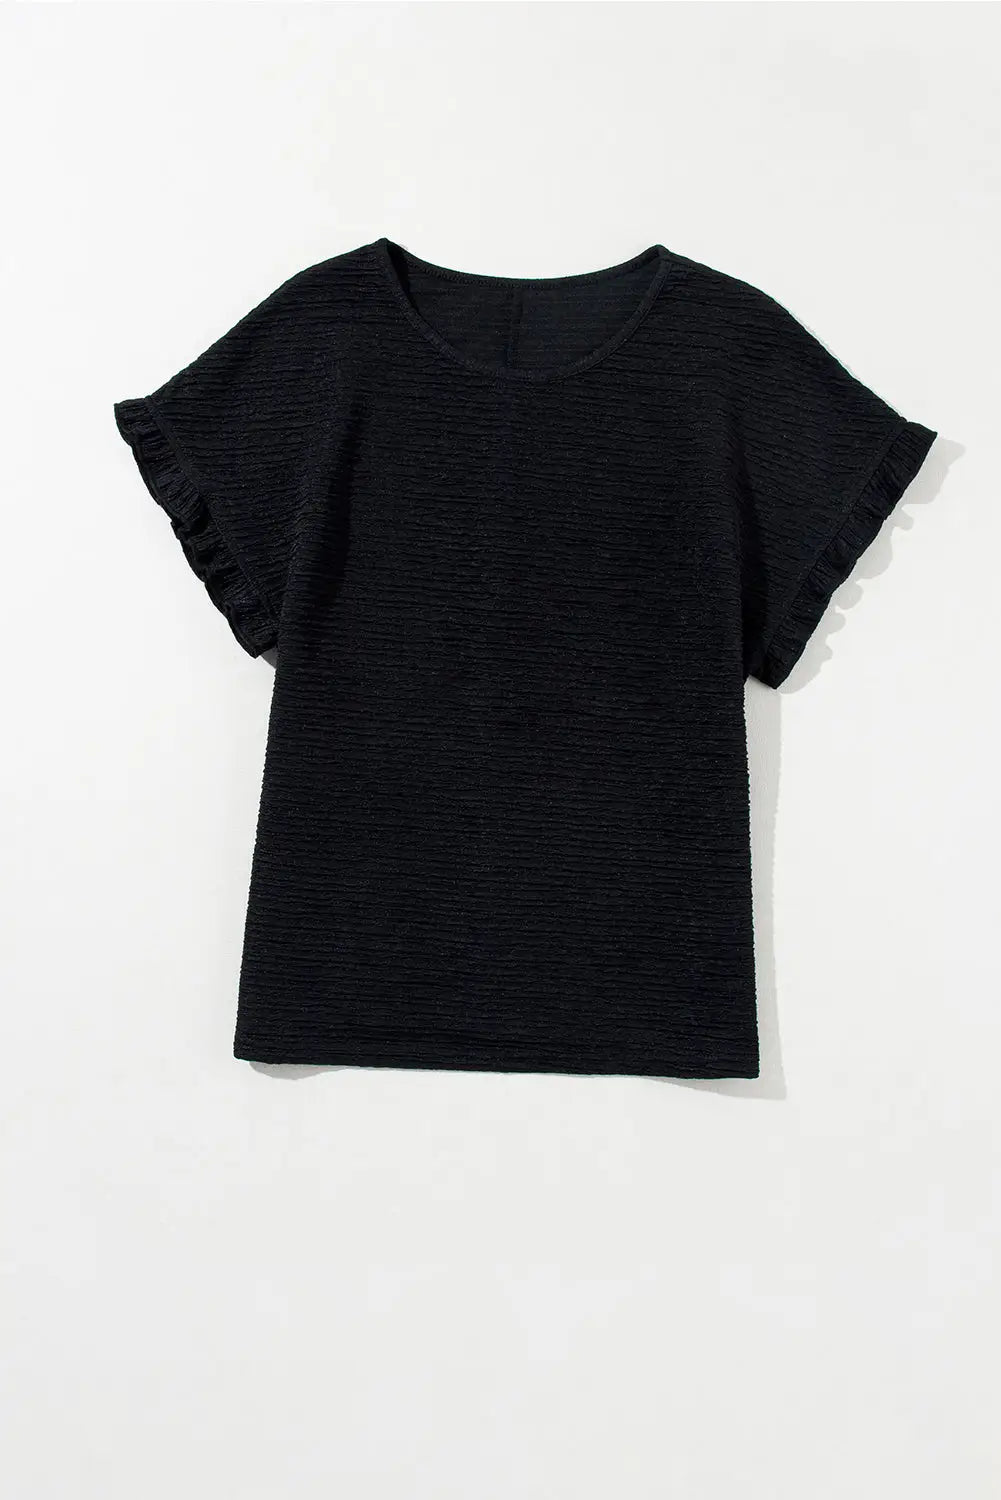 Black ruffled short sleeve blouse - tops/blouses & shirts